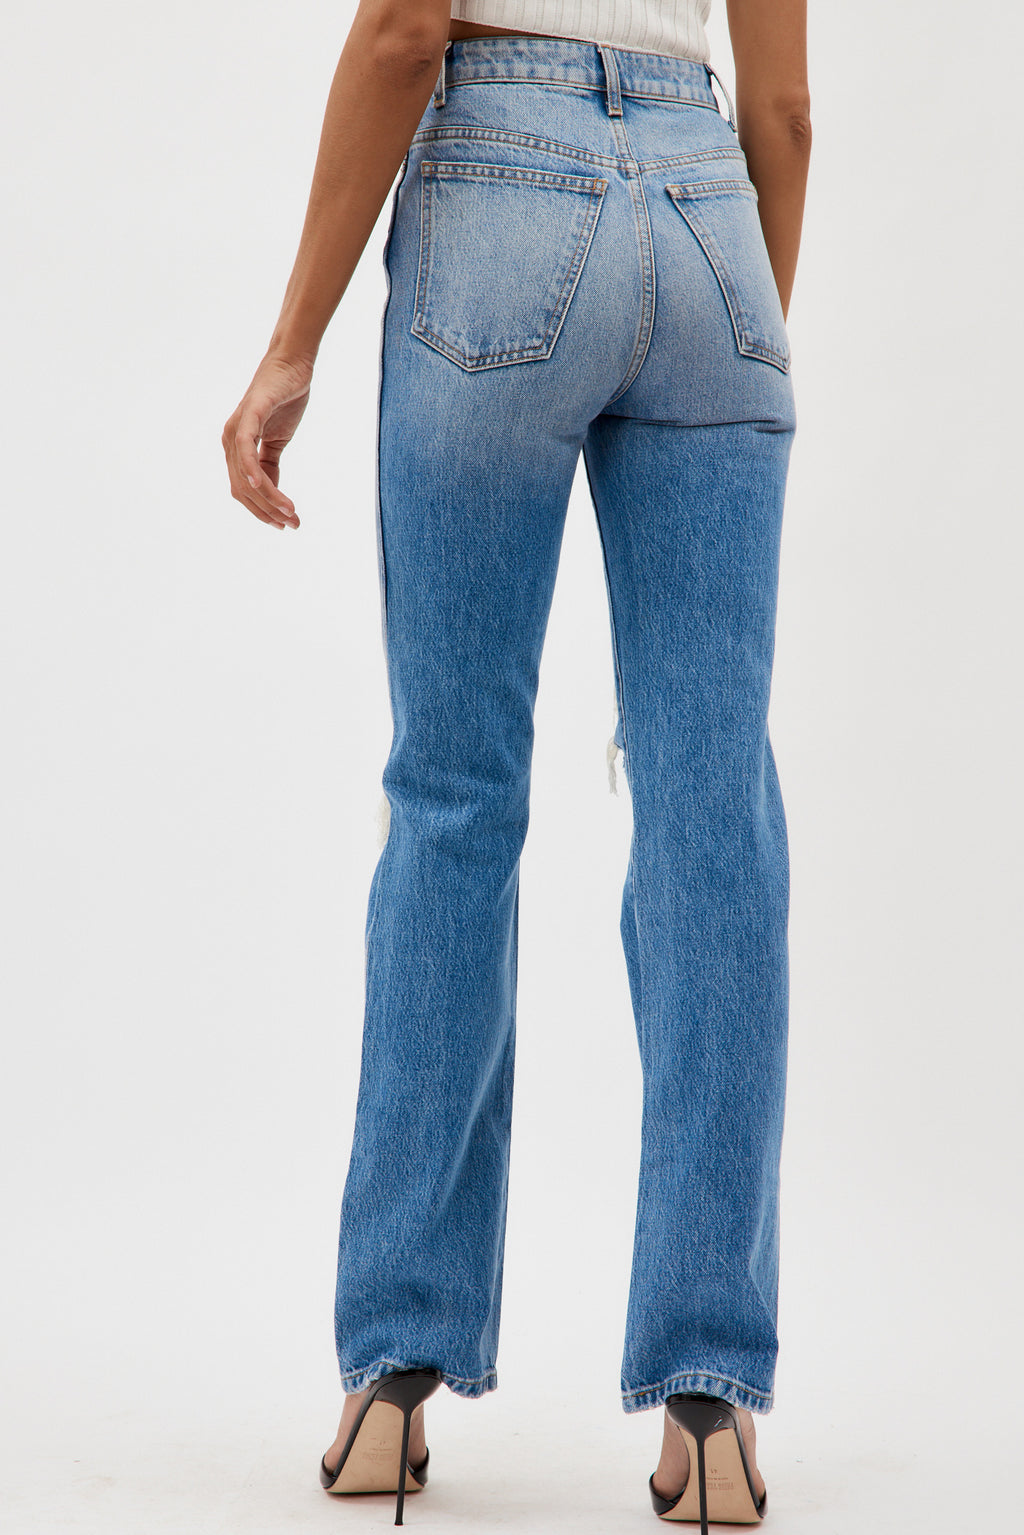 Danielle Portland Jeans